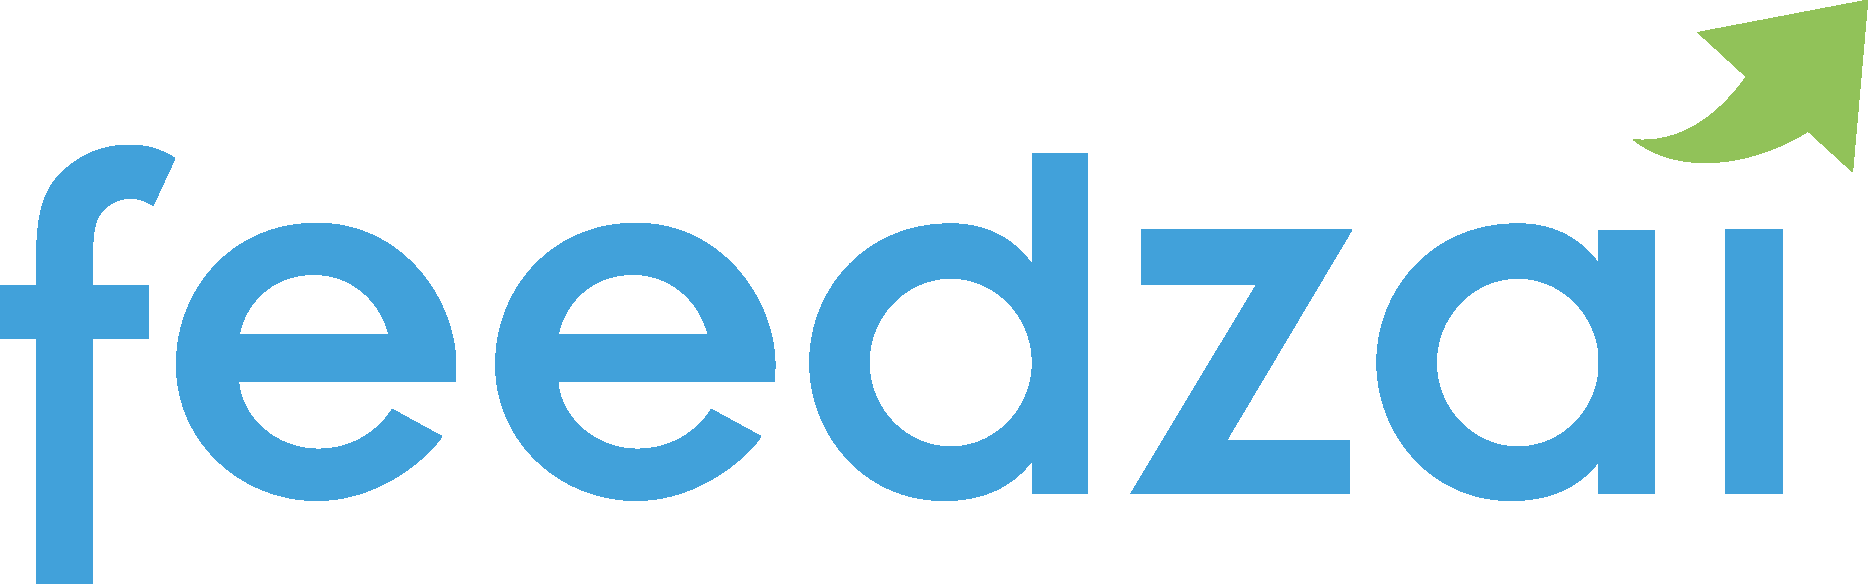 FeedZai Logo - Feedzai Logo - Free Downloads Graphic Design Materials